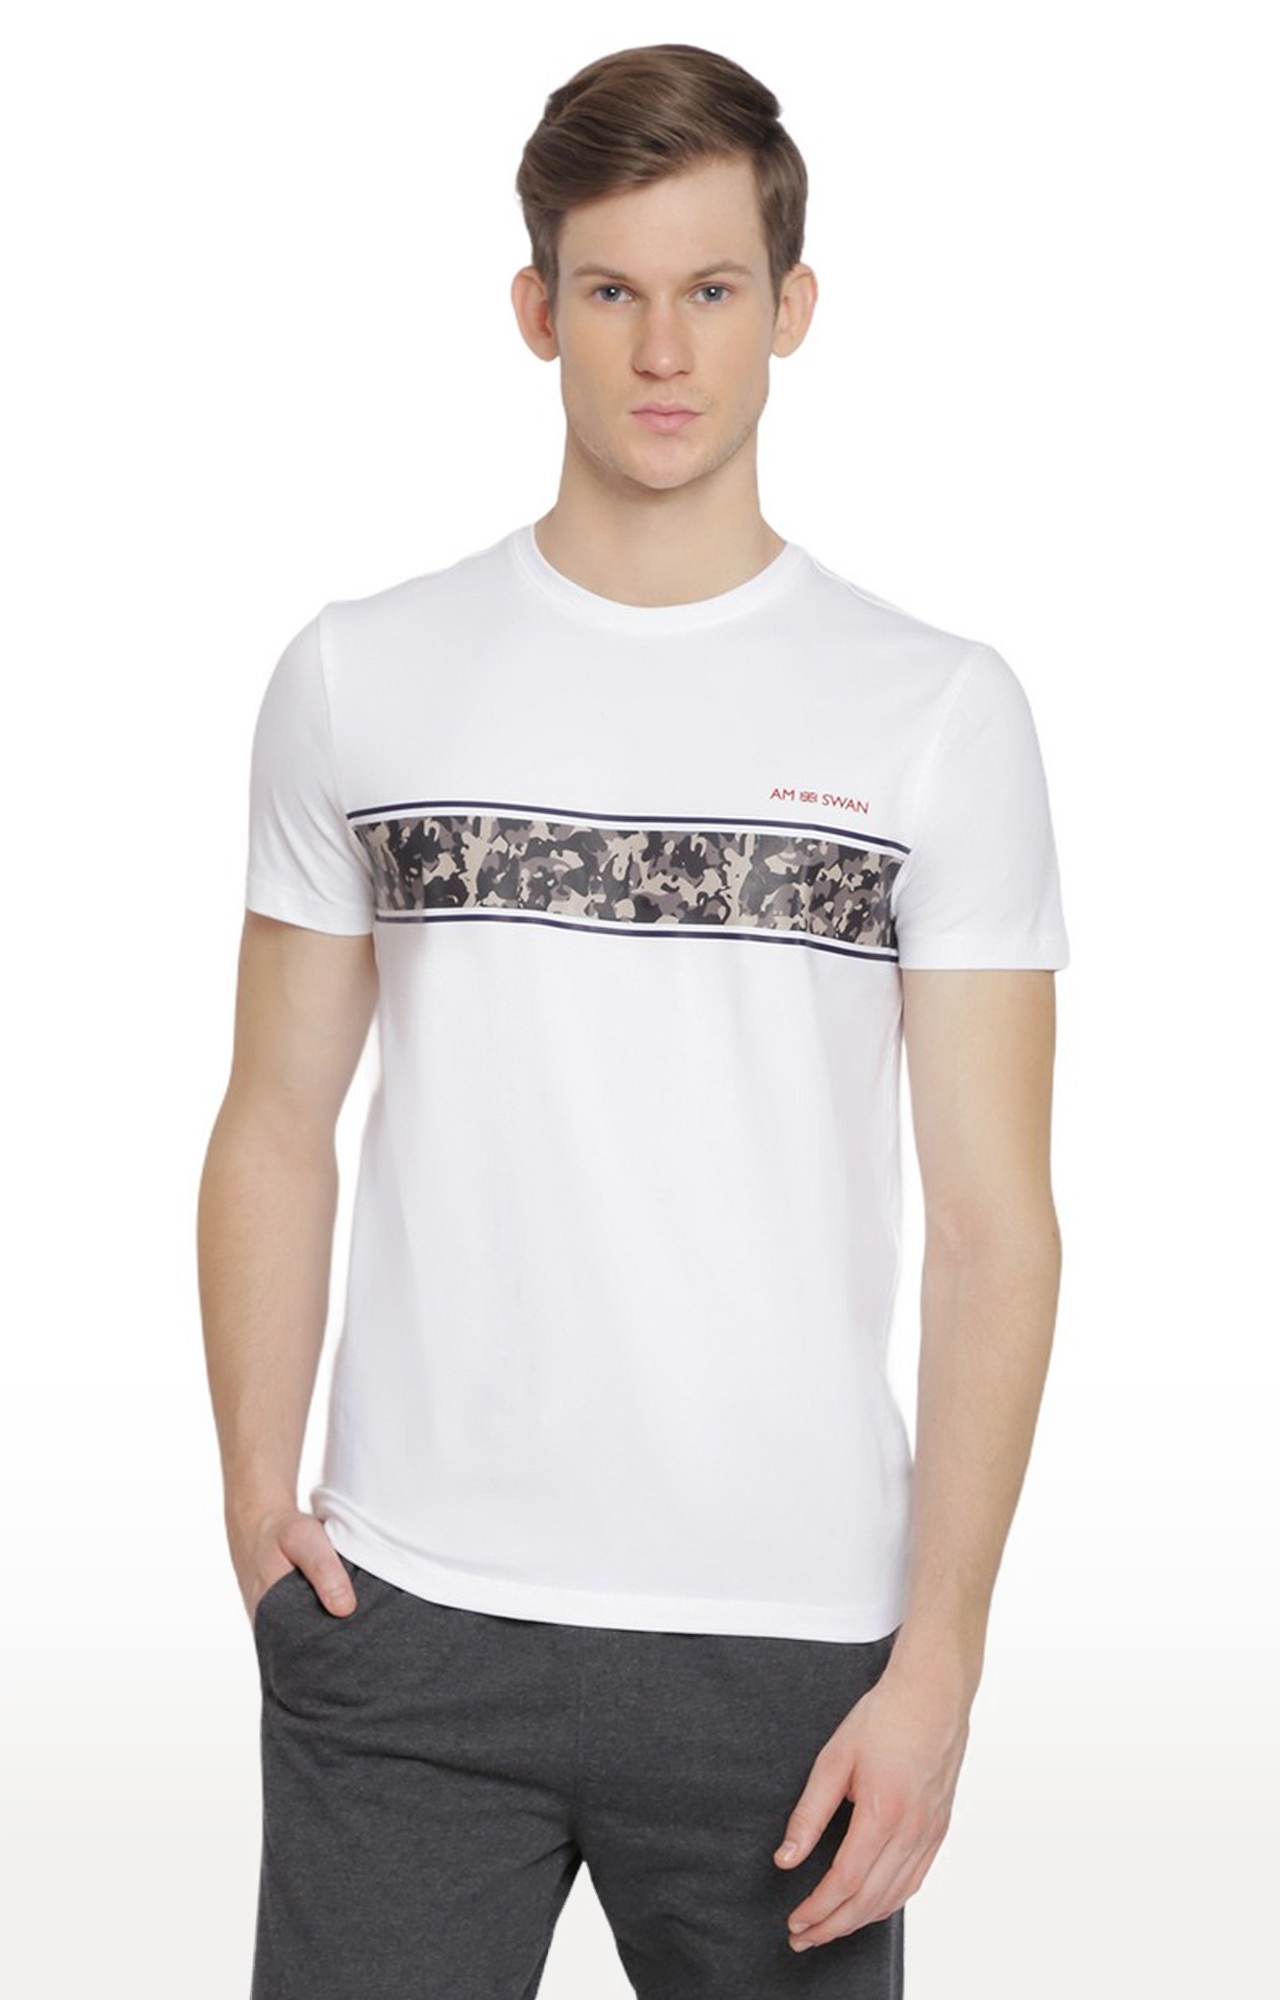 Am Swan | Men's White Cotton Blend Printed Regular T-Shirt